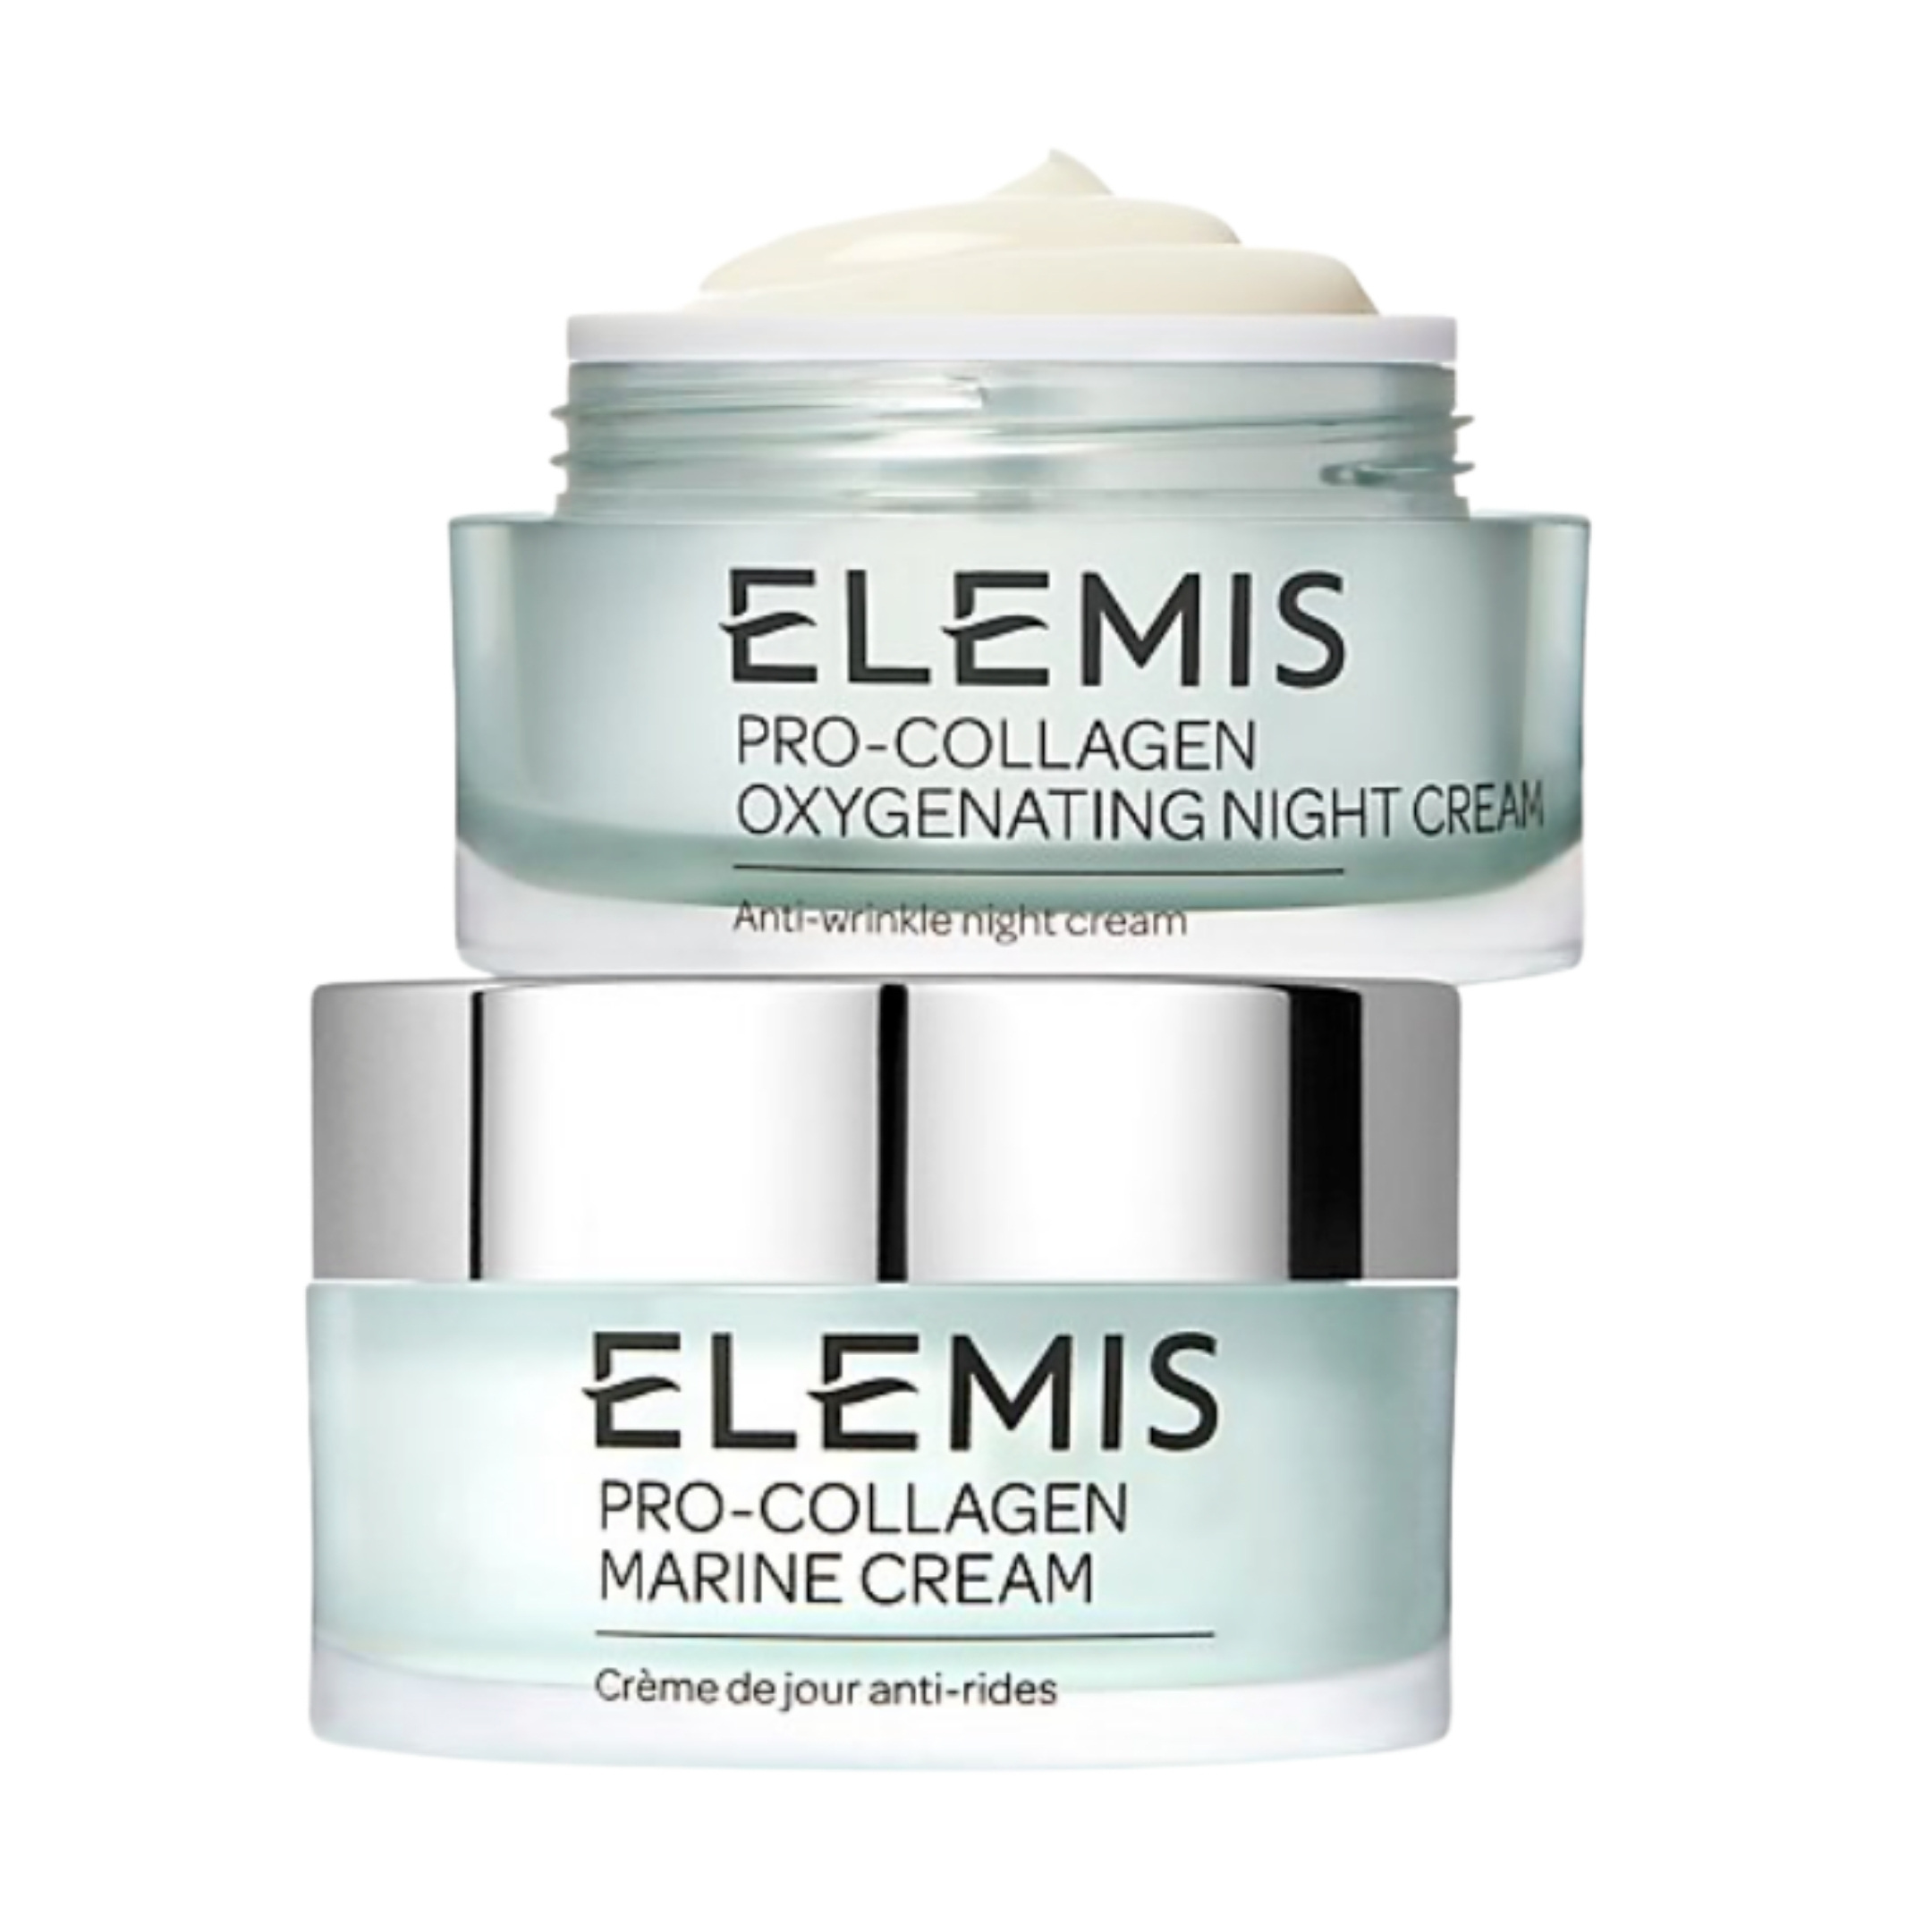 ELEMIS Products